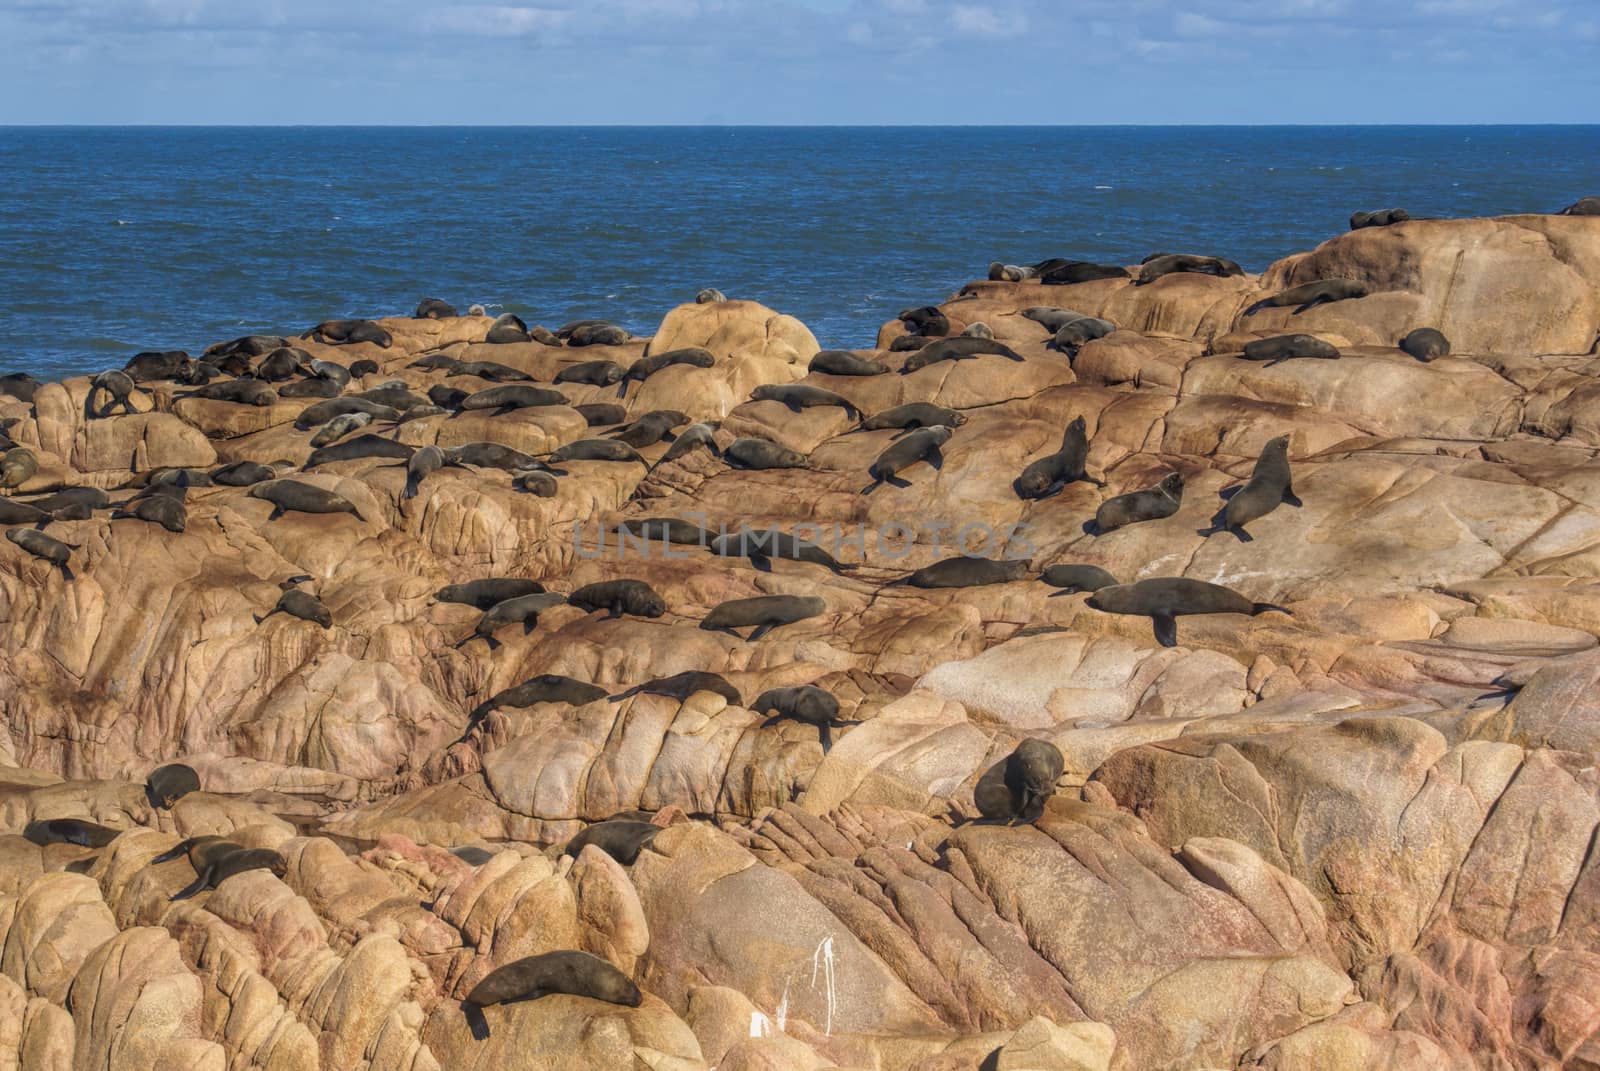 Sea lions in Cabo Polonio by MichalKnitl